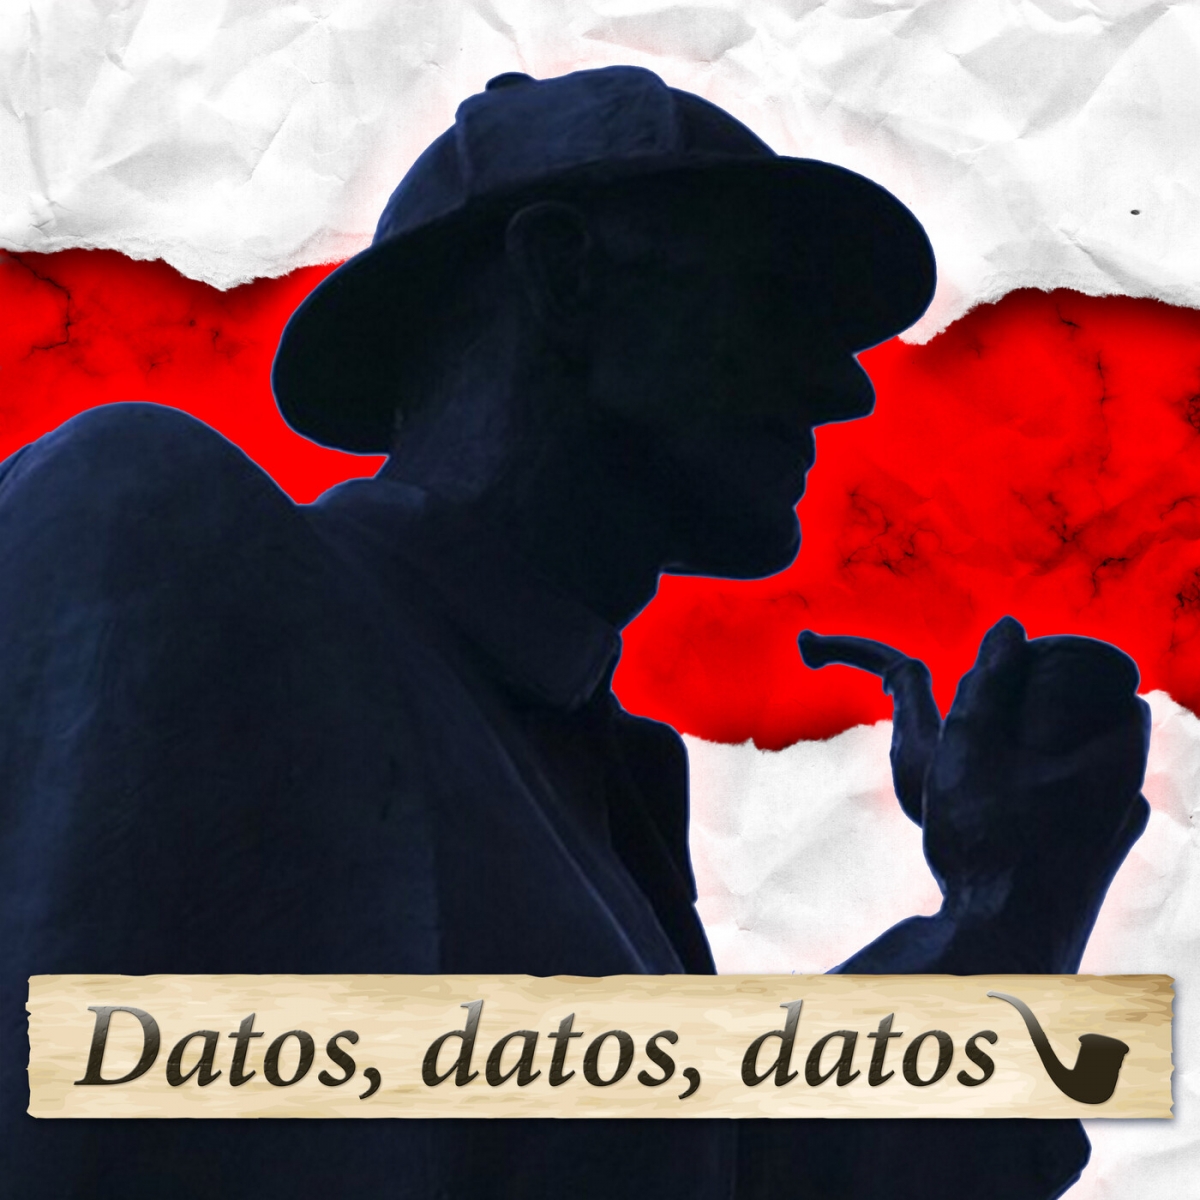 Pòdcast en directe 'Datos, datos, datos: podcast sobre Sherlock Holmes'